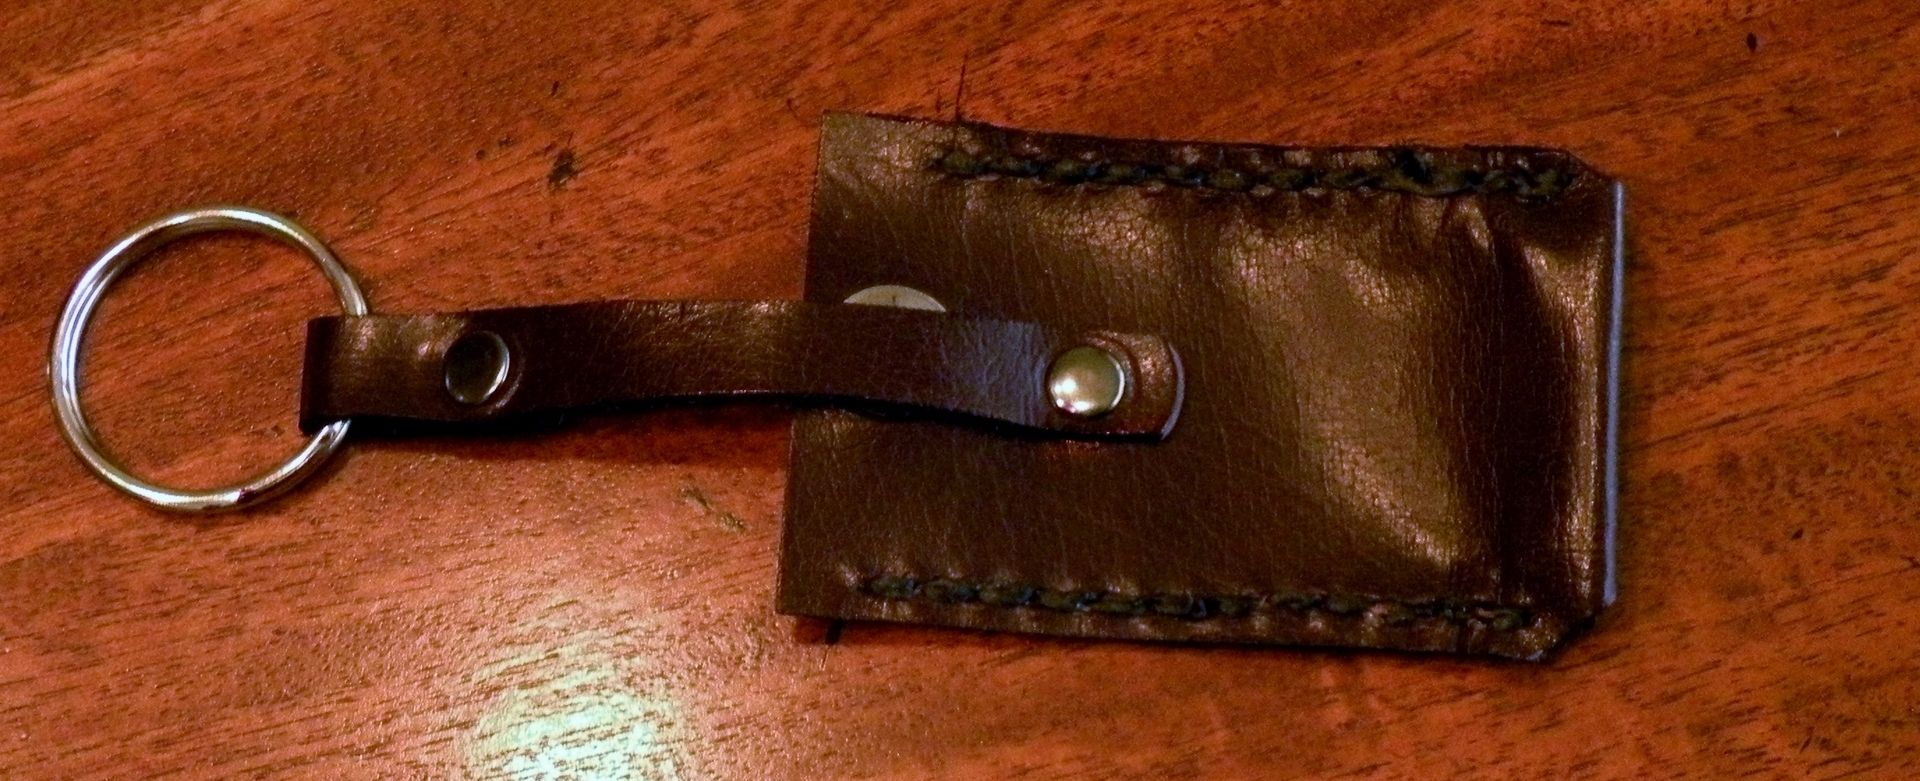 Handmade Leather Key Case by Rics Leather | CustomMade.com